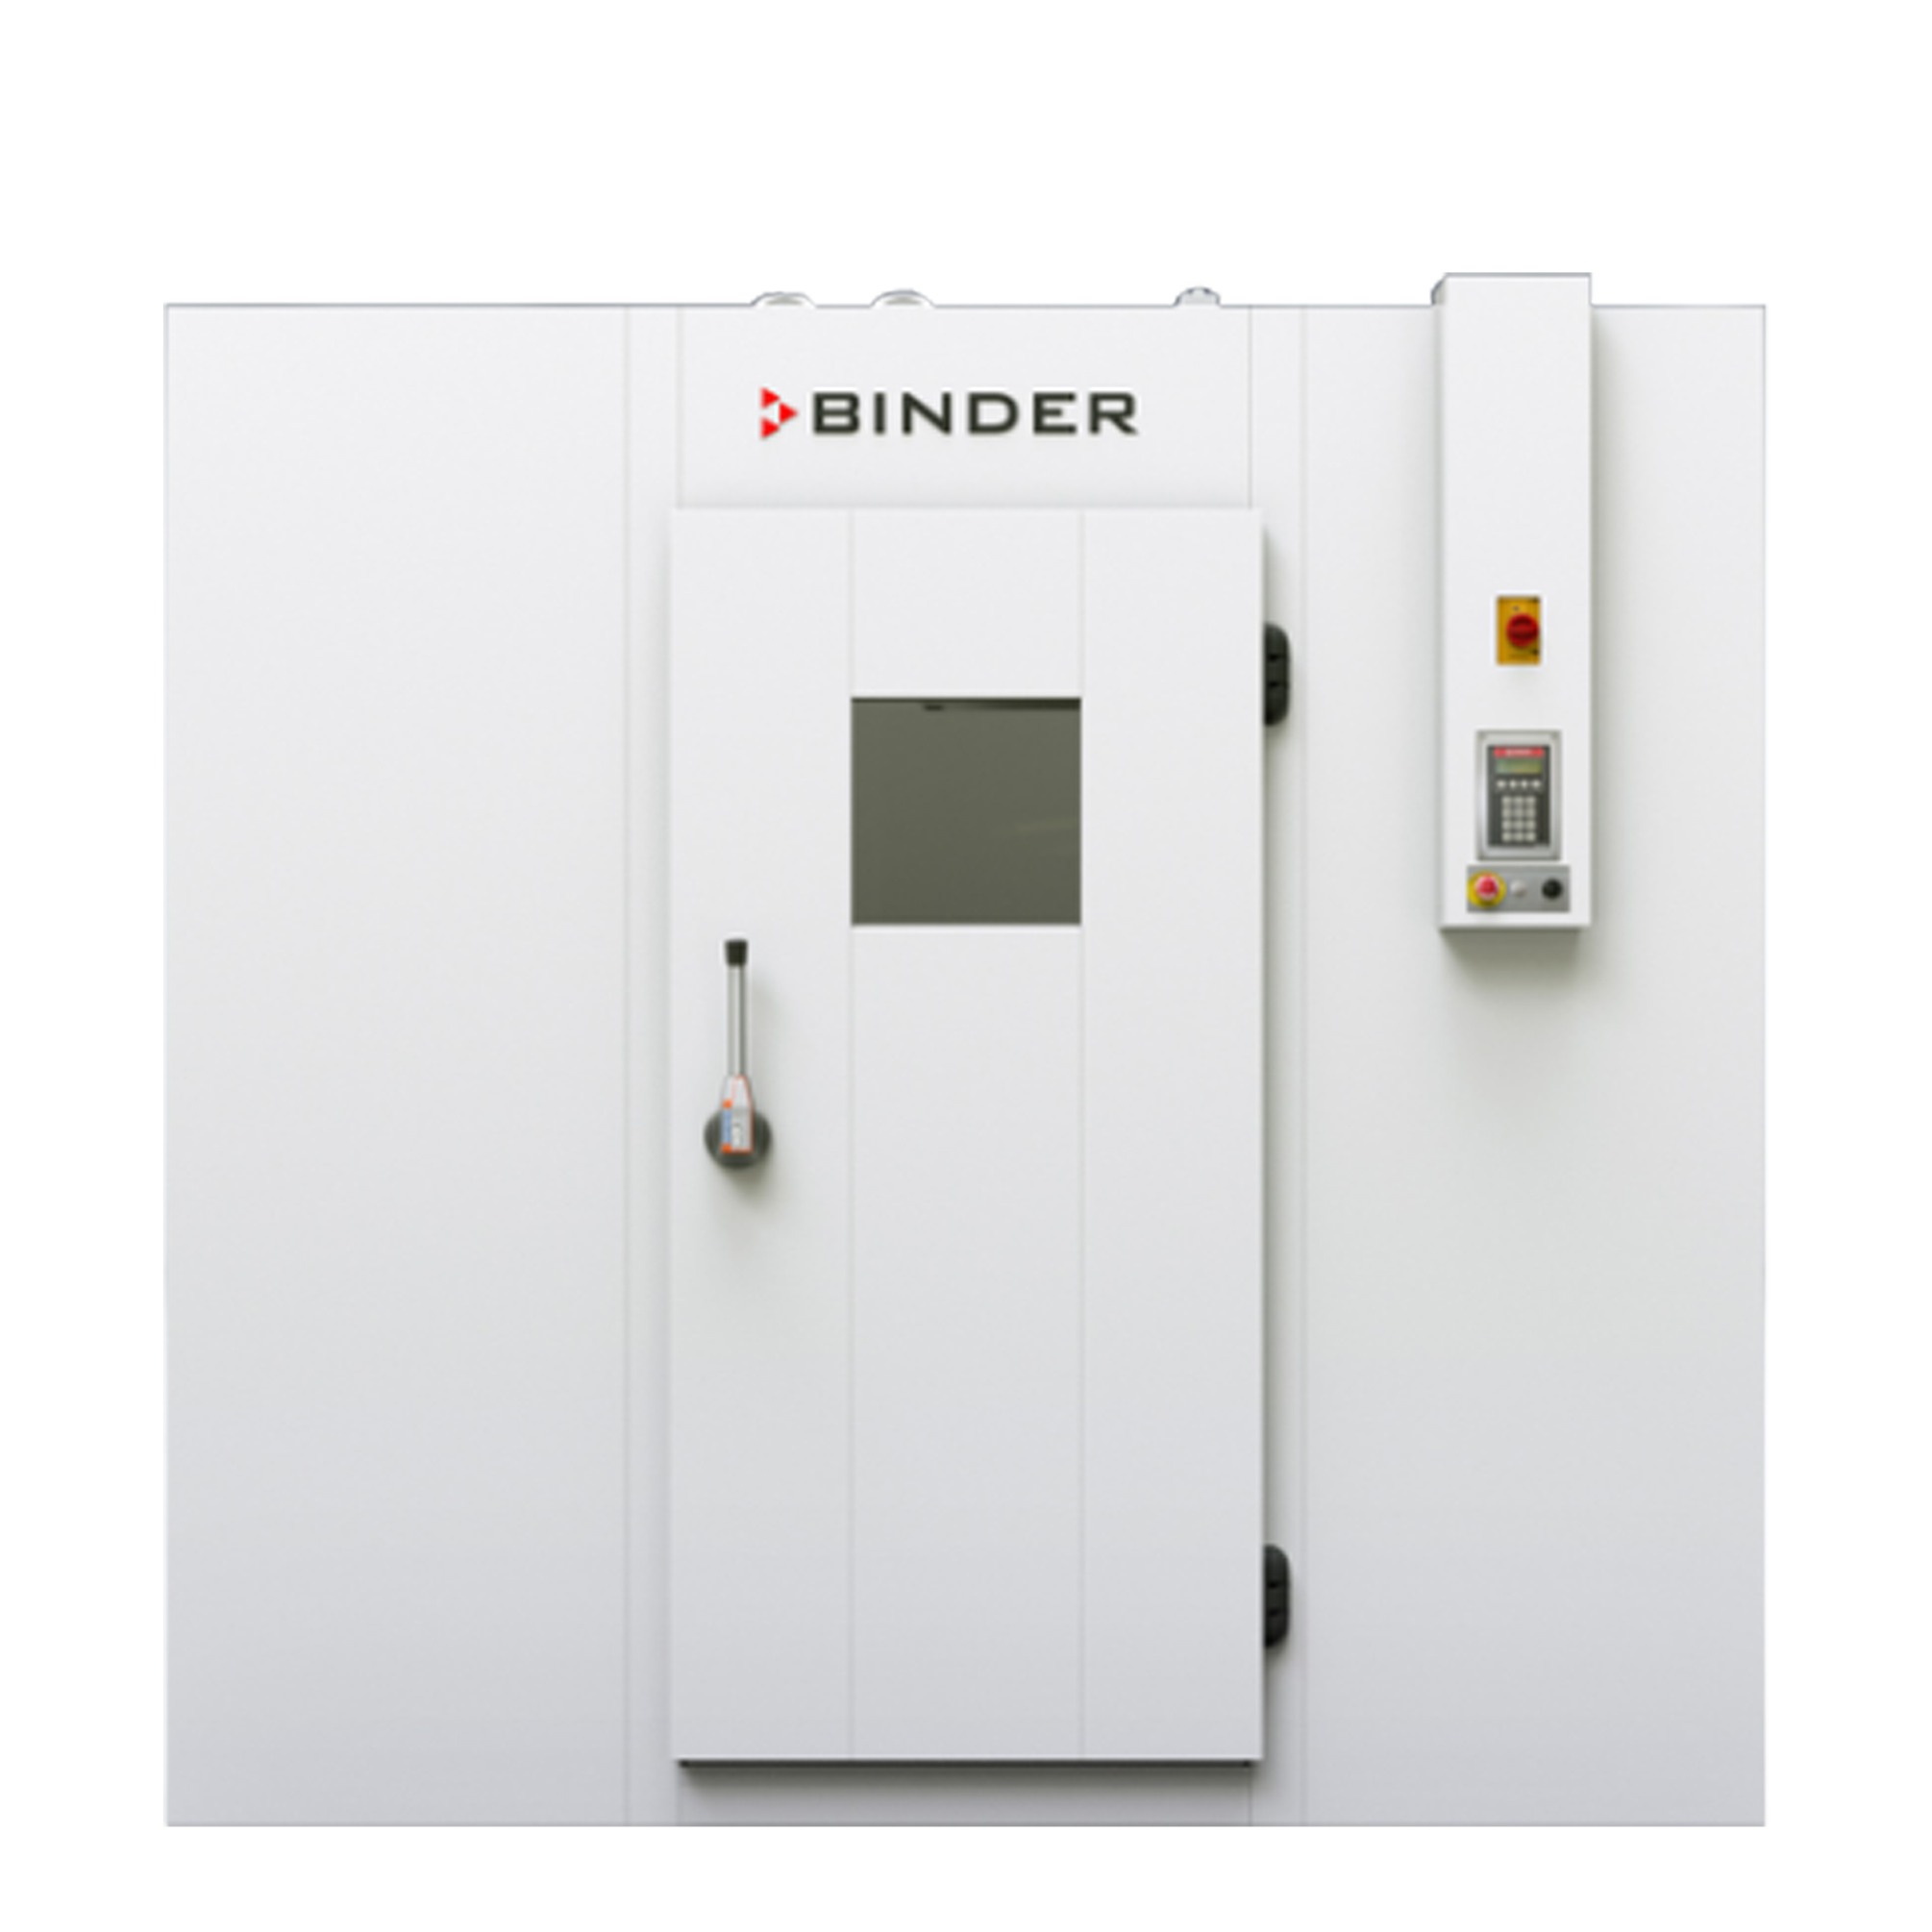 BINDER 步入式恒温恒湿箱